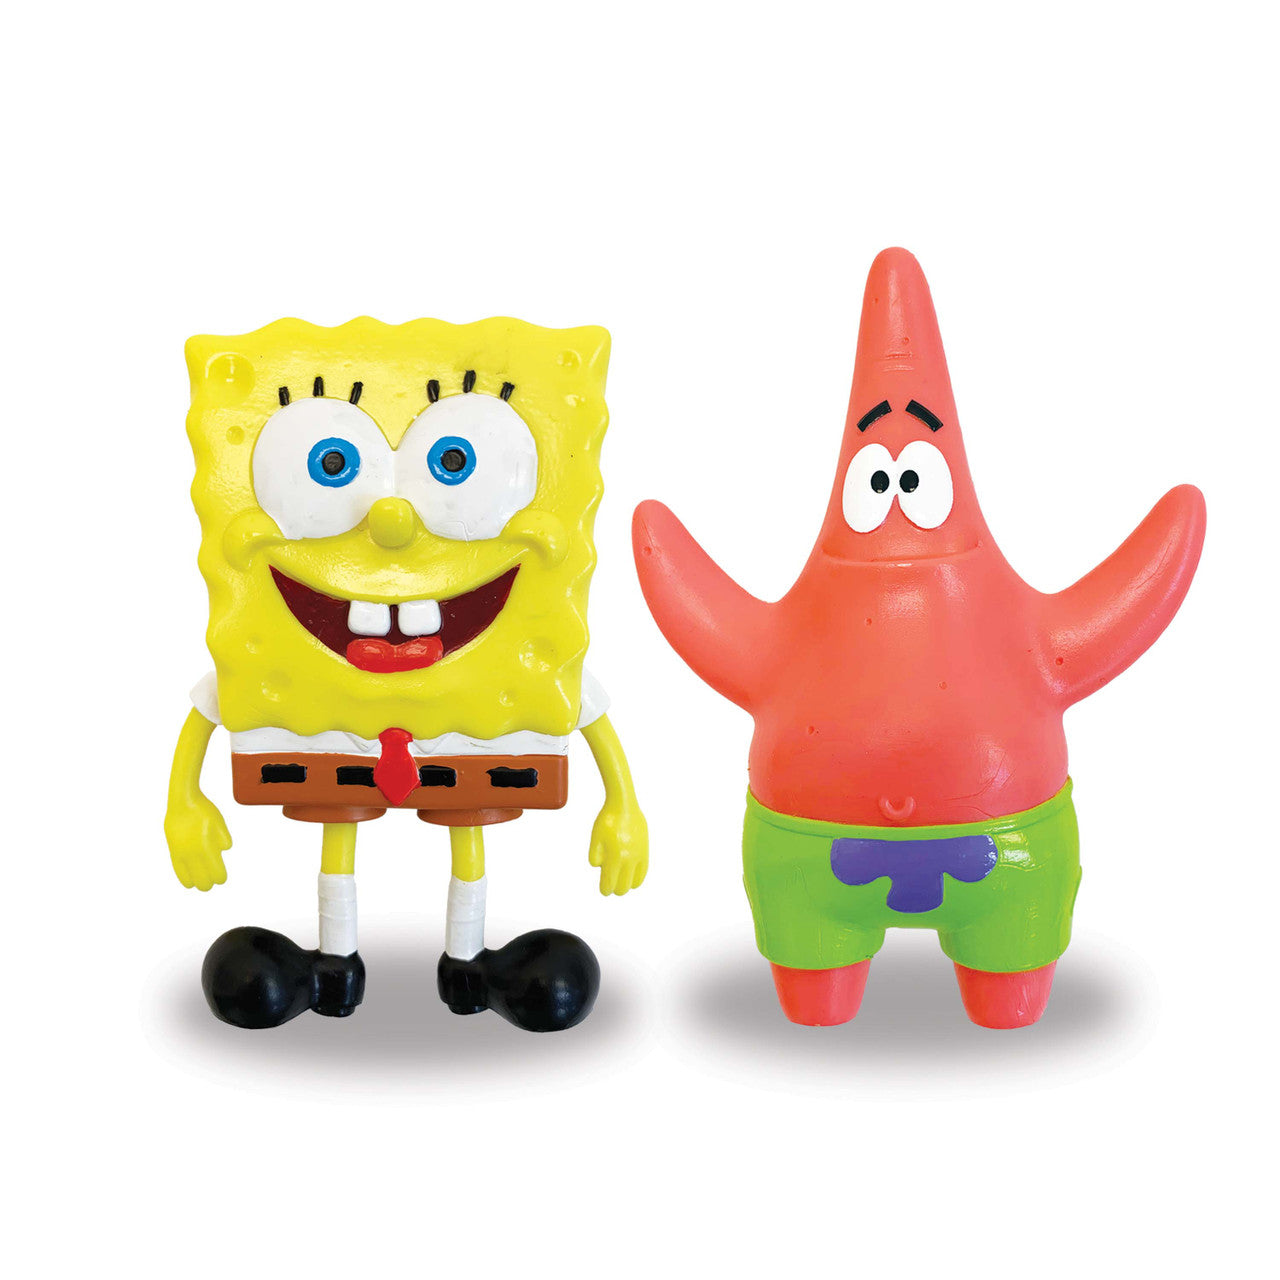 NJ Croce-Bend-Ems Spongebob and Patrick Pair-55153-Legacy Toys